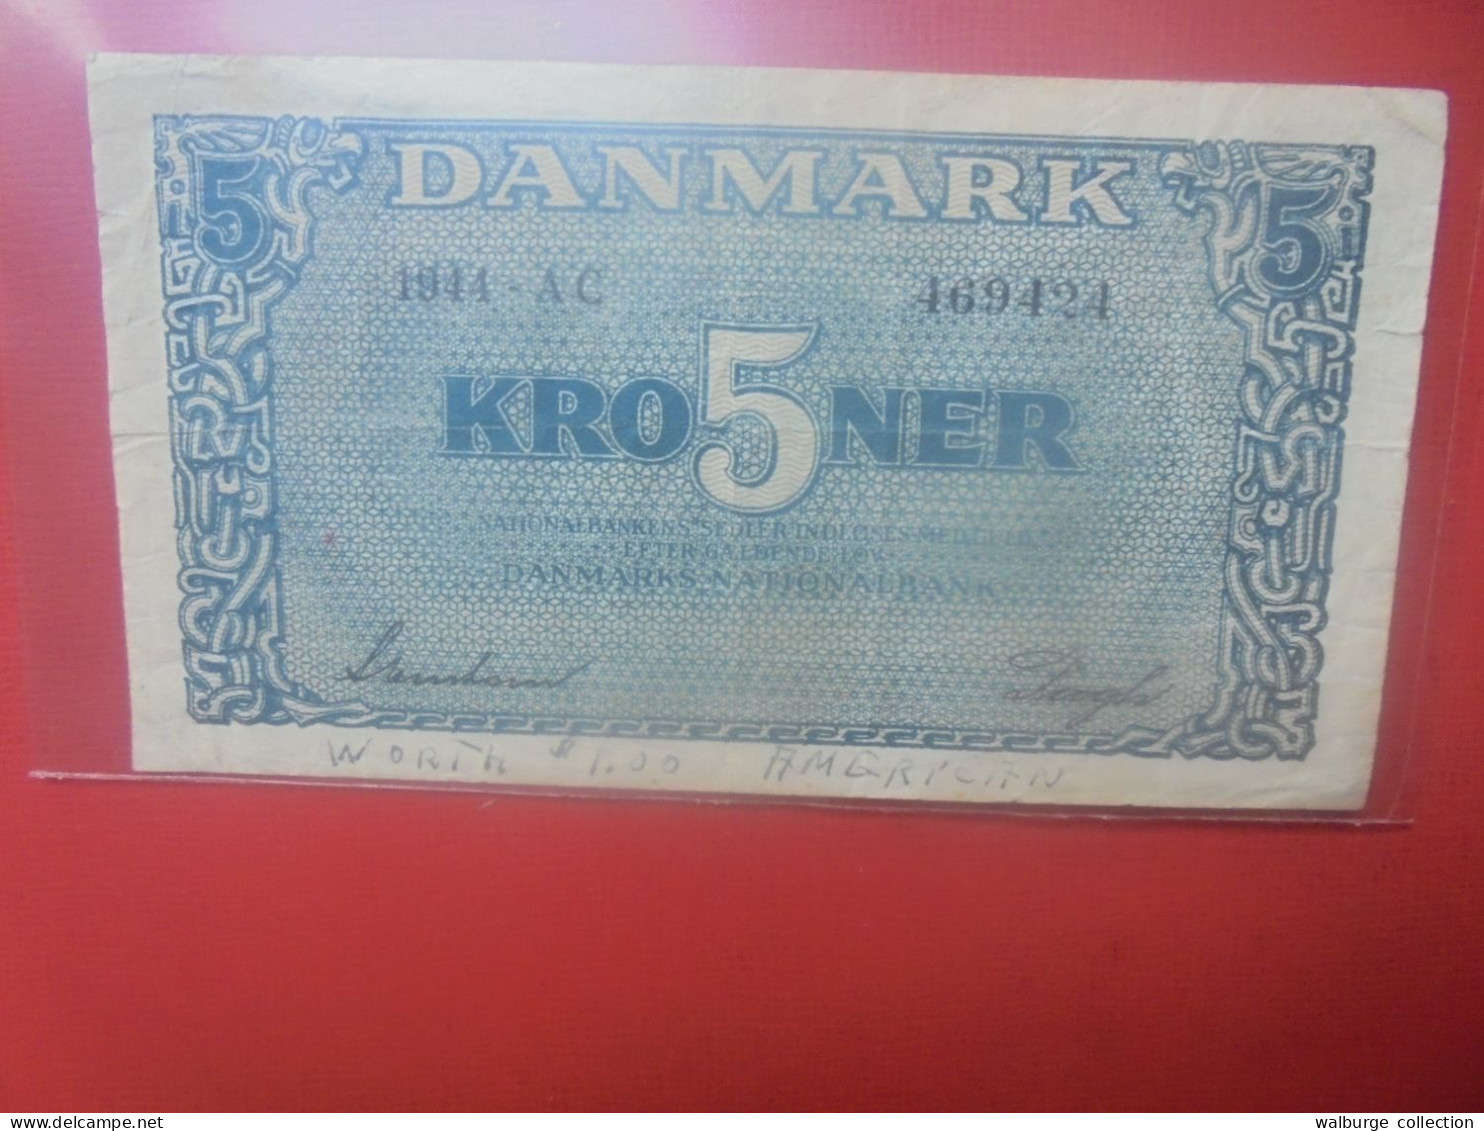 DANEMARK 5 KRONER 1944 Préfix "A C" RARE ! Circuler (B.31) - Danemark